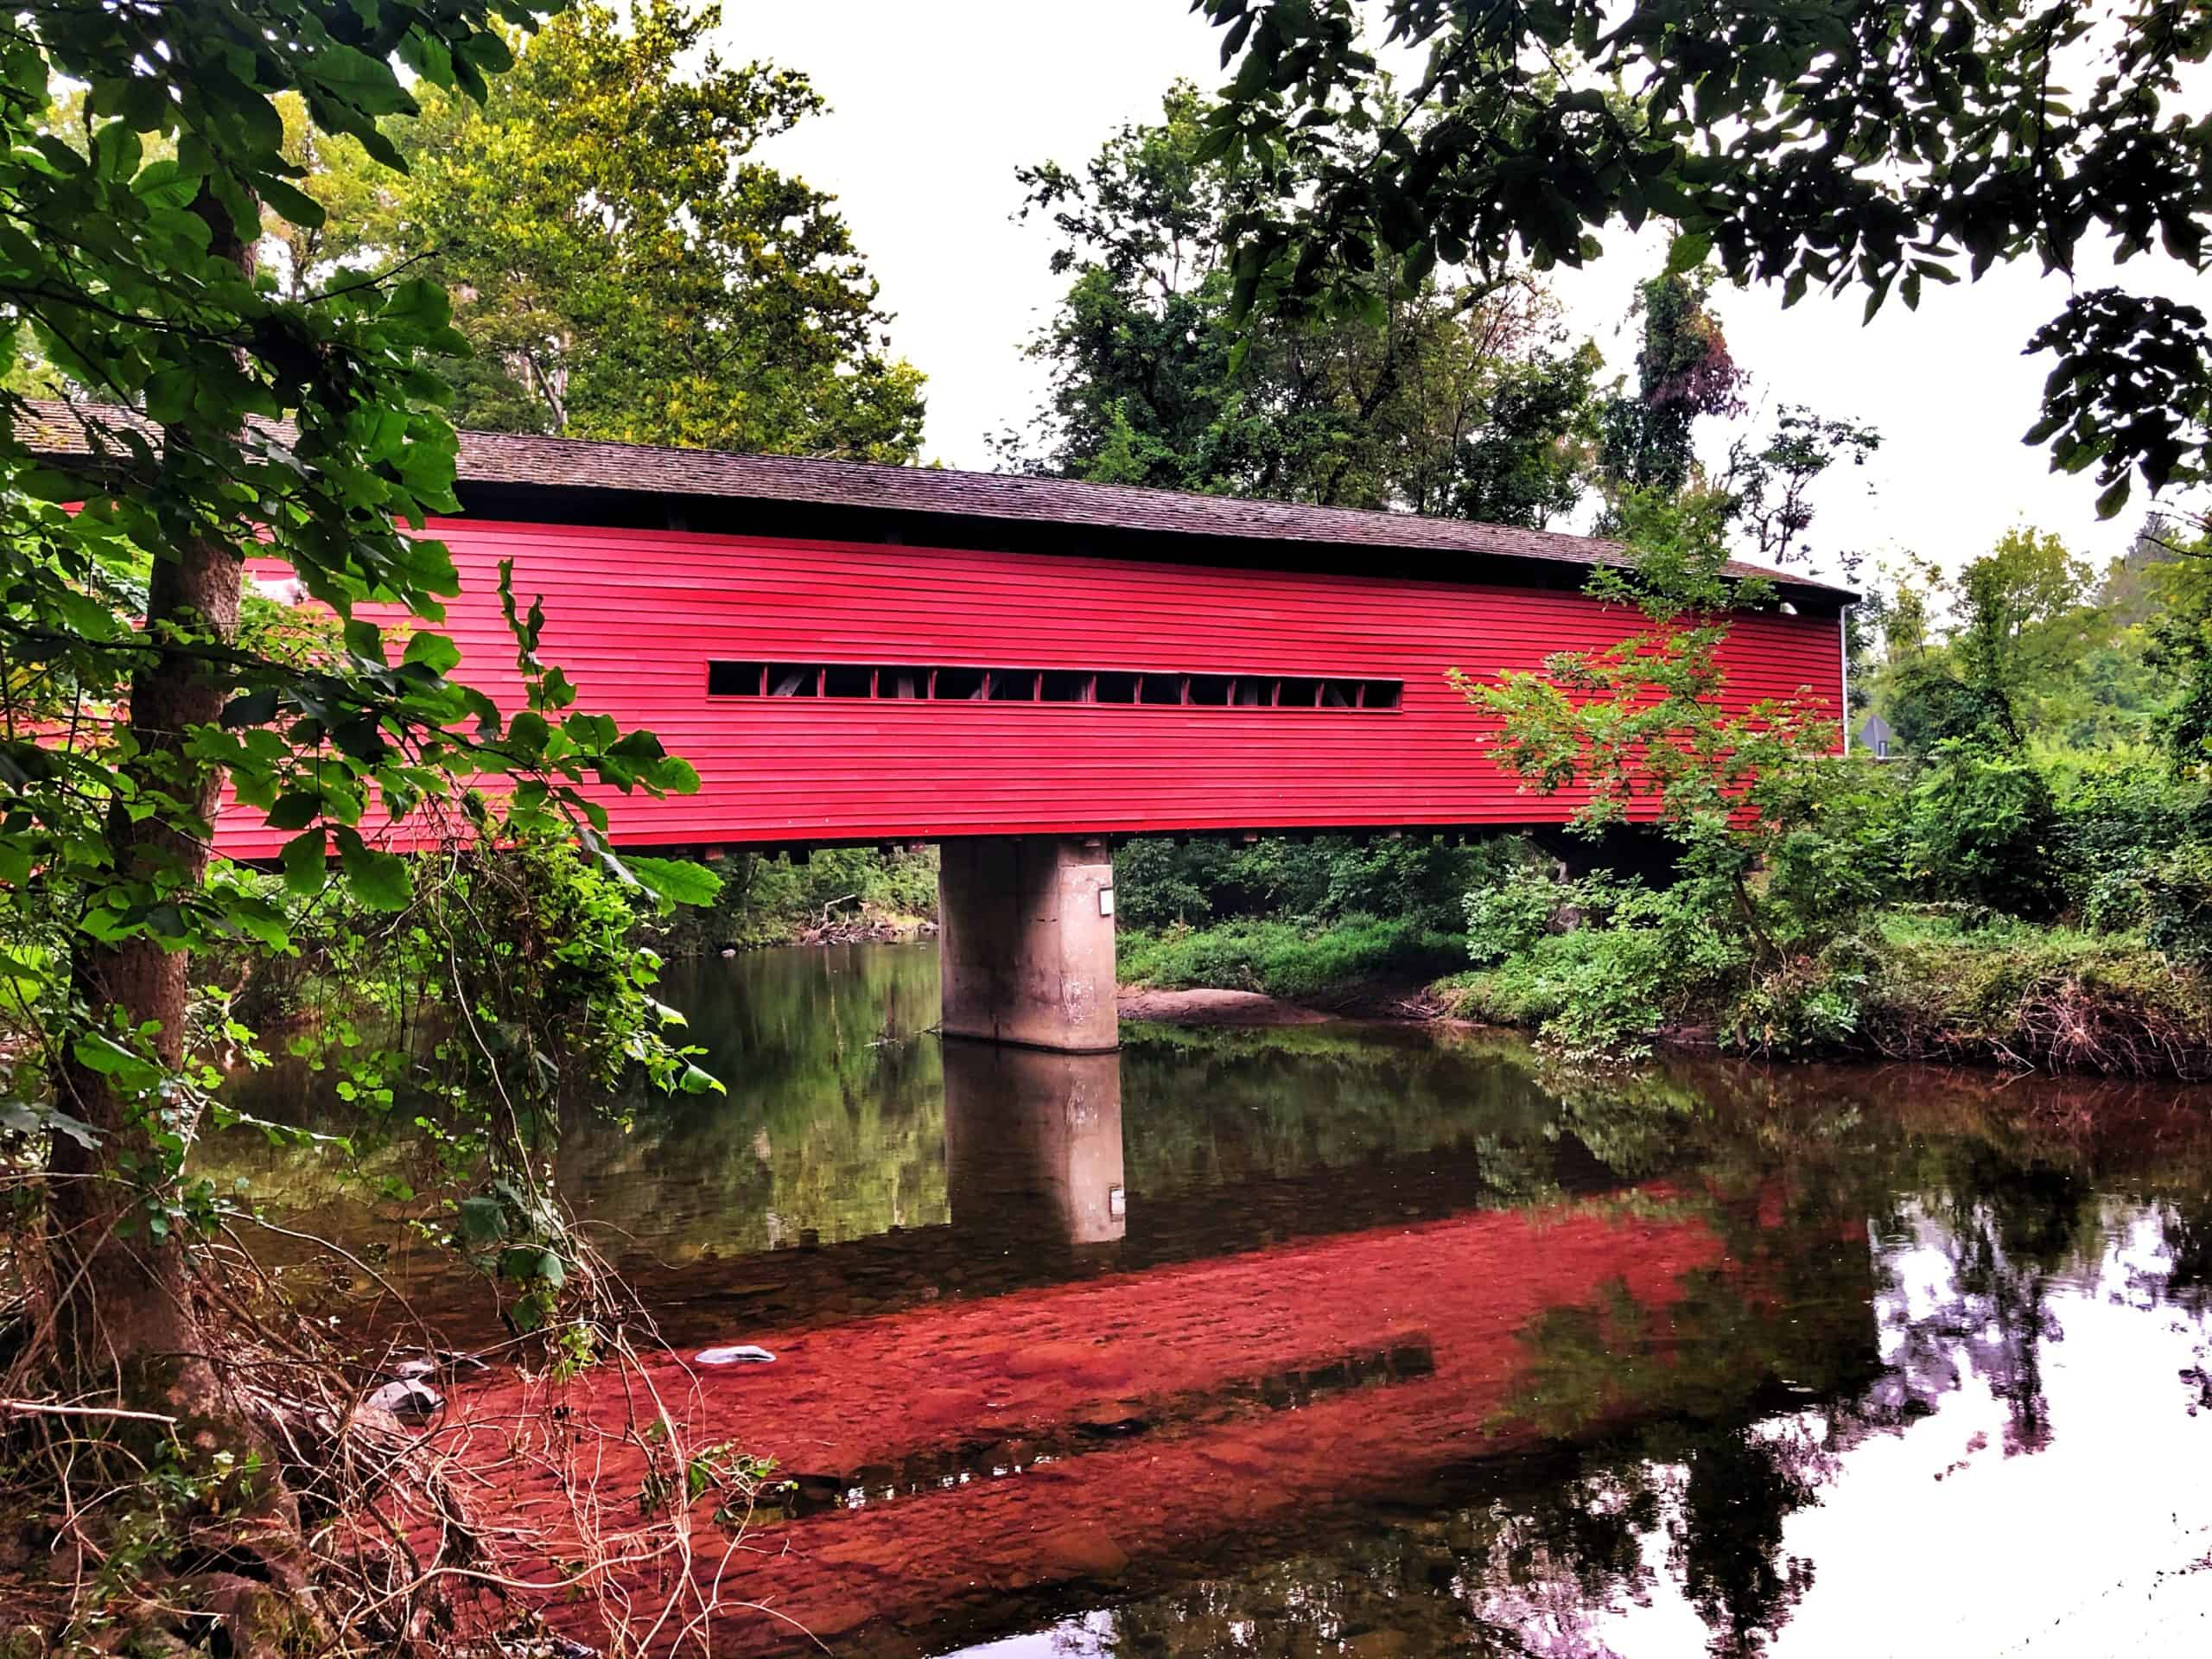 Sheeder-Hall Covered Bridge